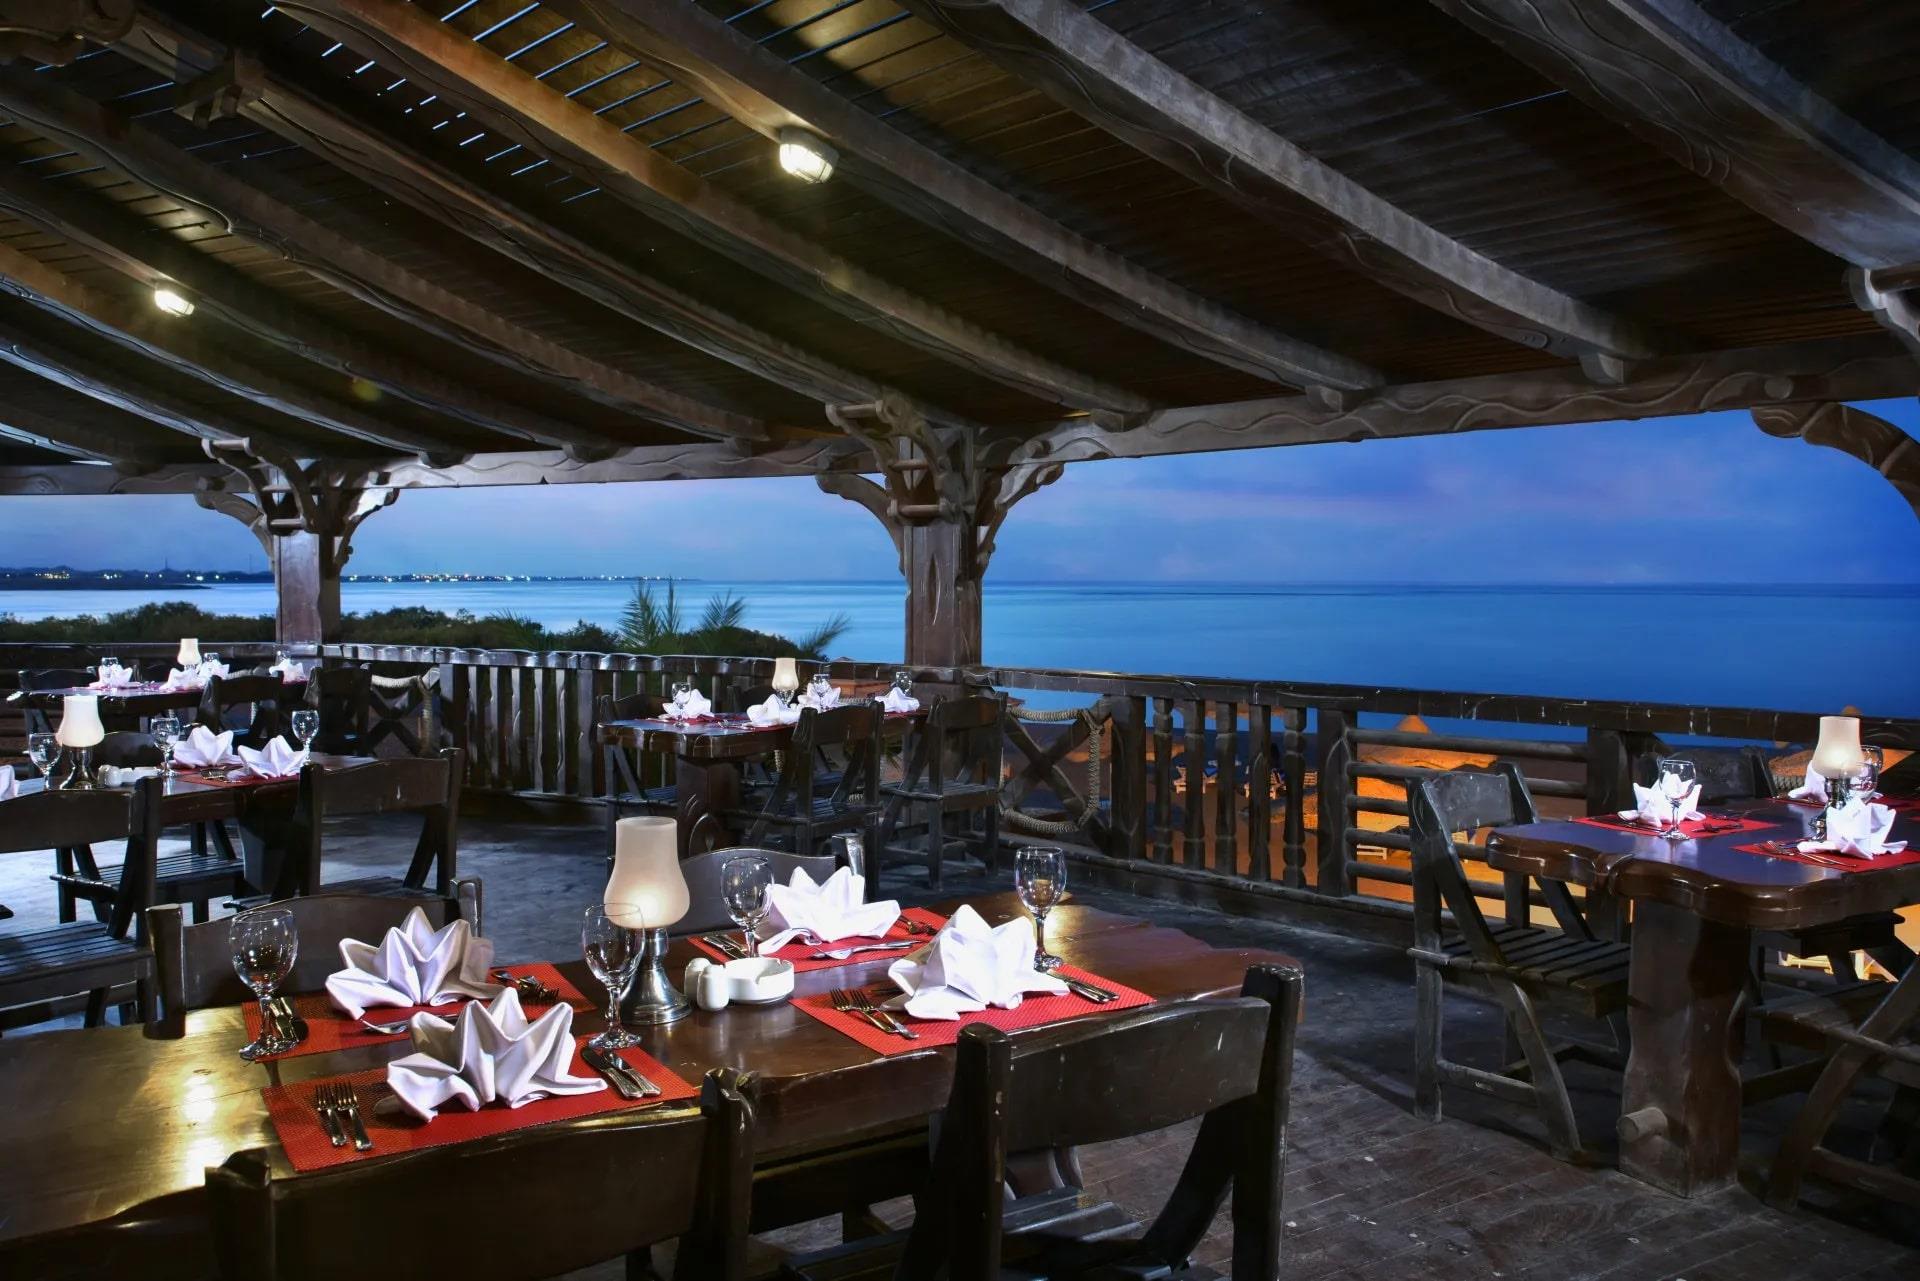 Hotelux Oriental Coast Marsa Alam Resort 5*